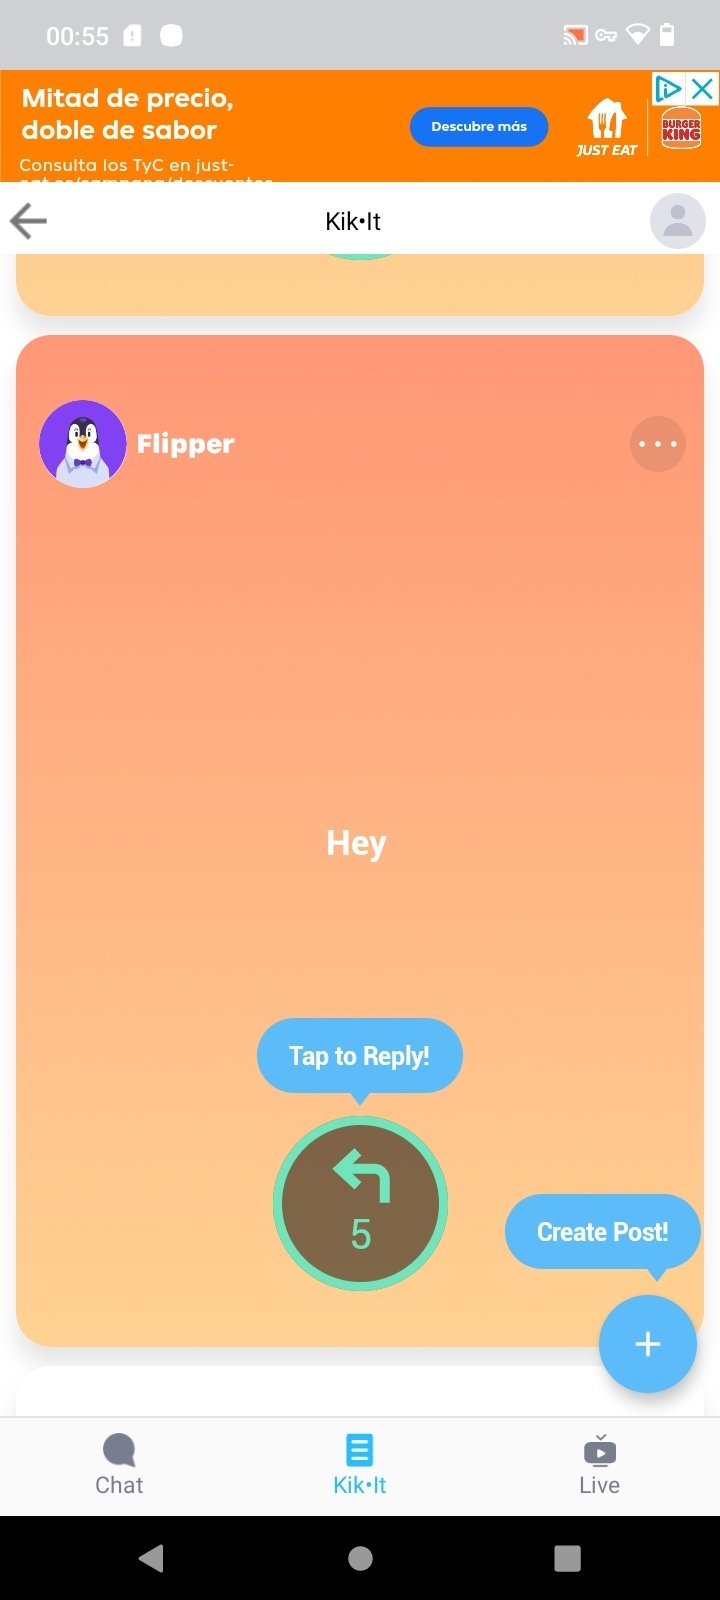 kik messenger download android apk